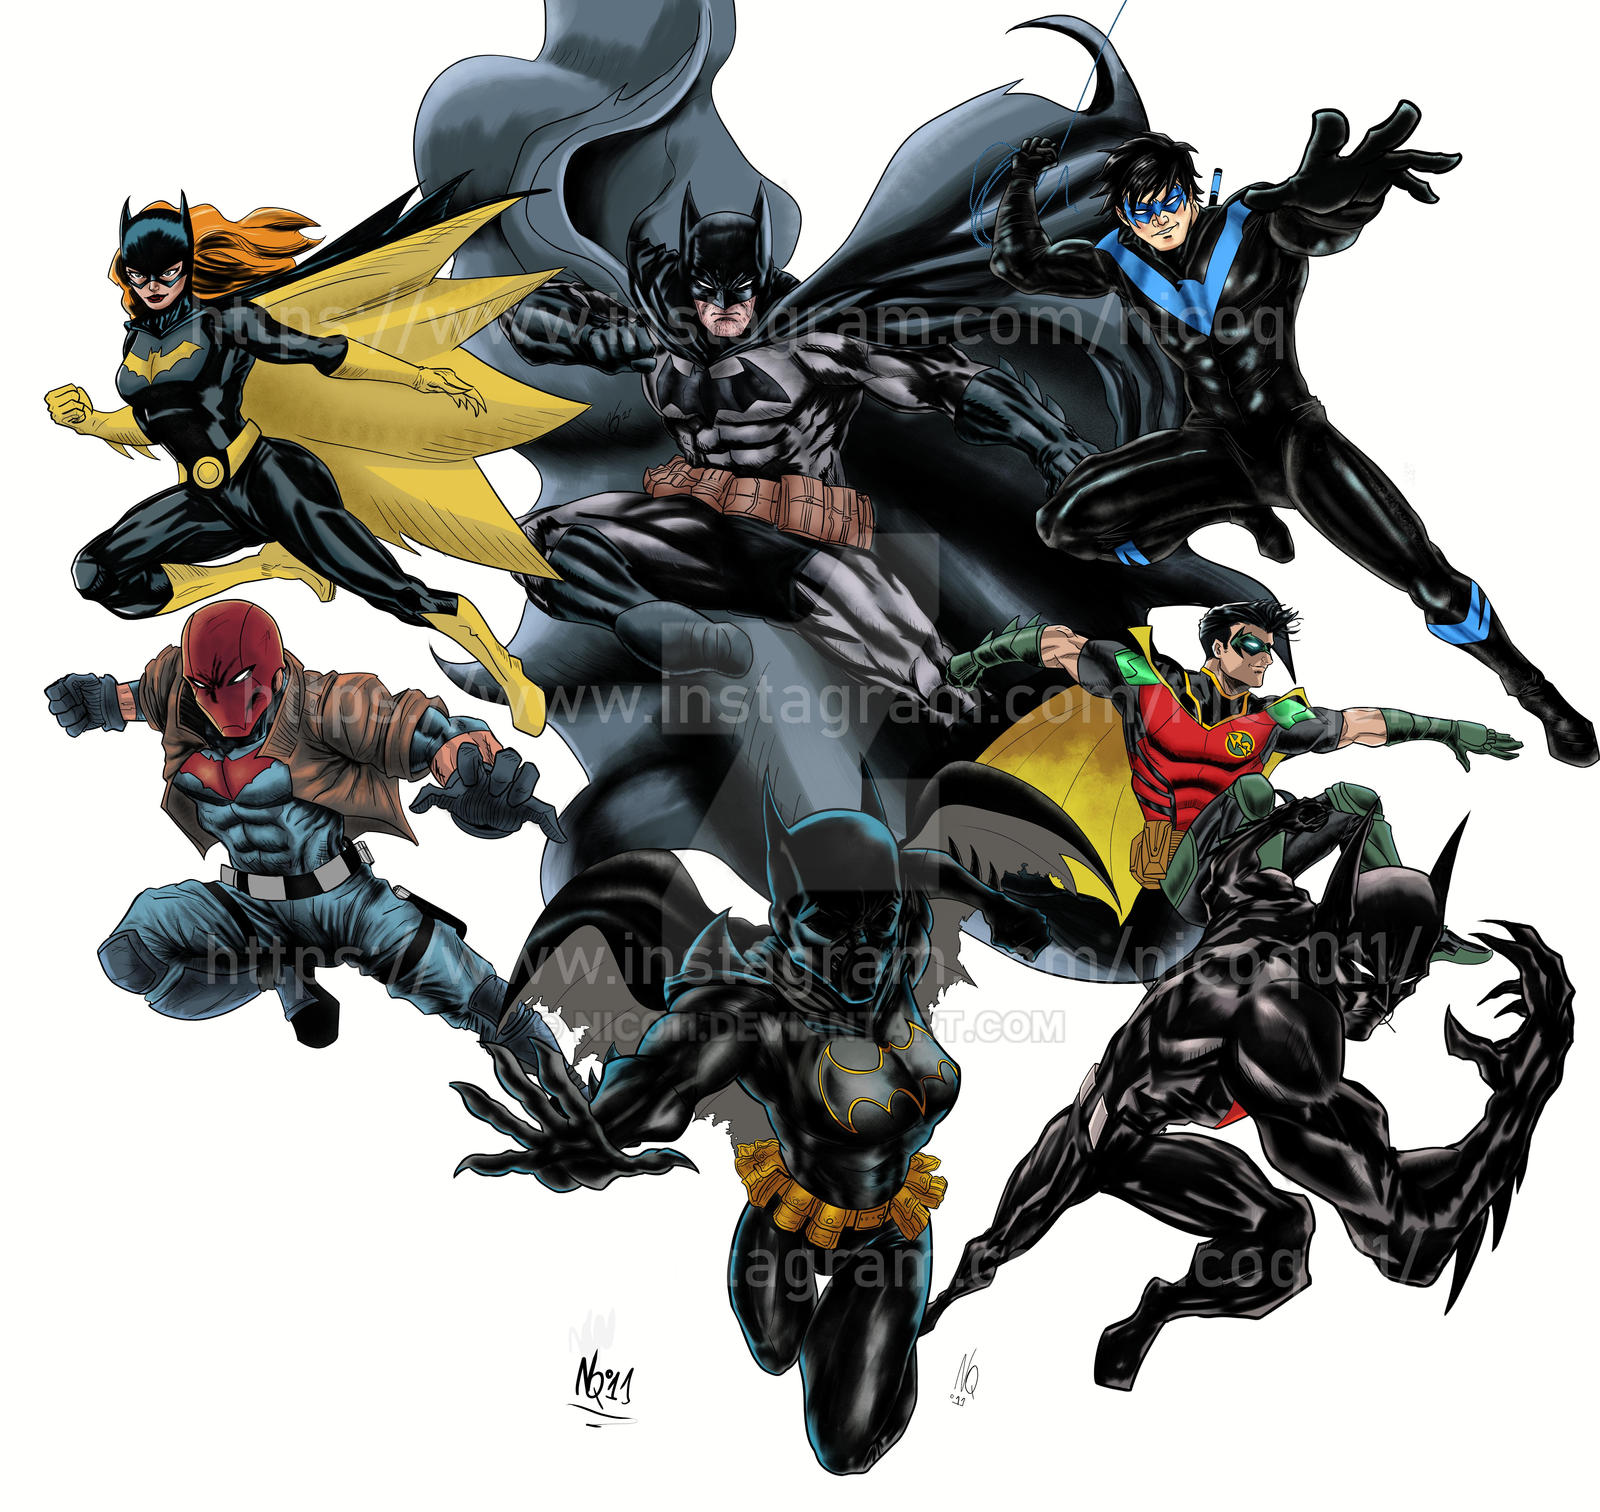 GOTHAM KNIGHTS #SketchEmAll DC Universe by emmshin on DeviantArt